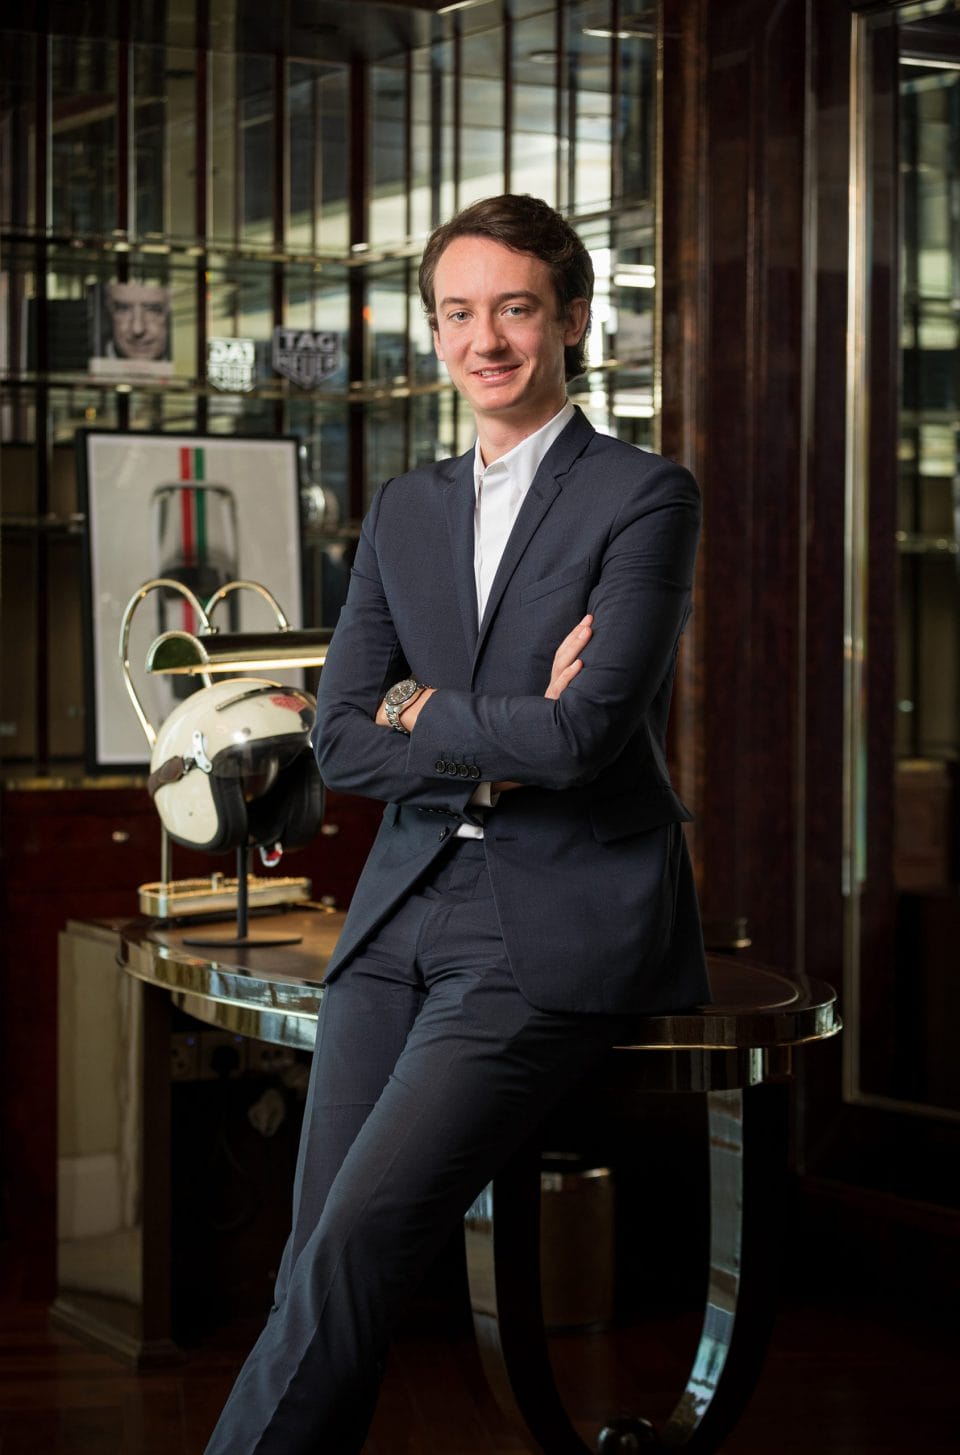 Frédéric Arnault, Tag Heuer CEO, Believes Partnership Is Key